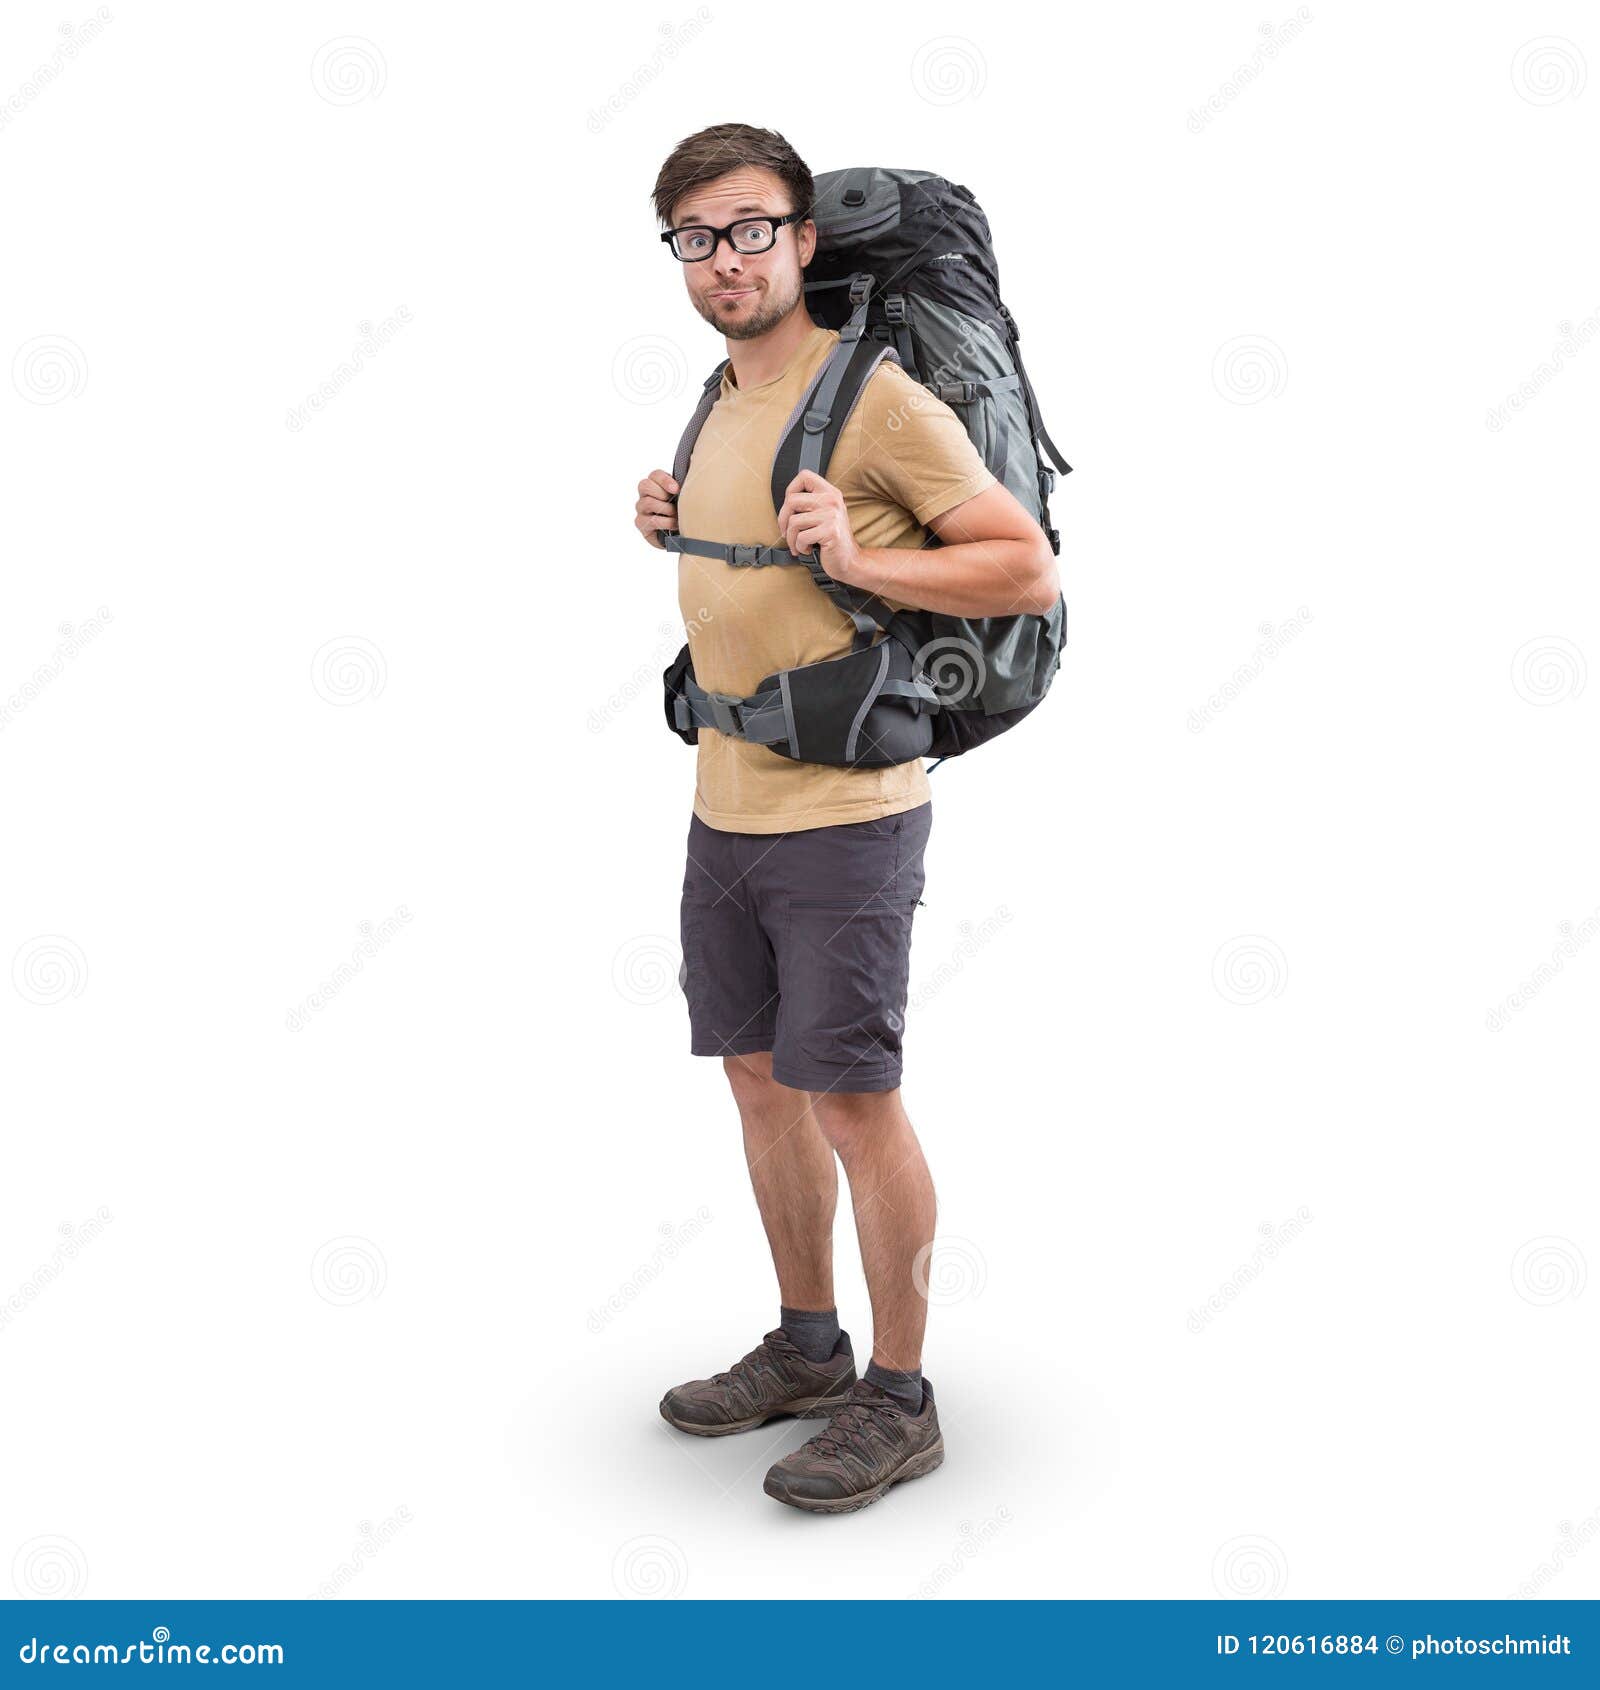 Скинул рюкзак. Путешественник с большим рюкзаком. Человек с огромным рюкзаком. Мужик с большим рюкзаком. Парень с рюкзаком.